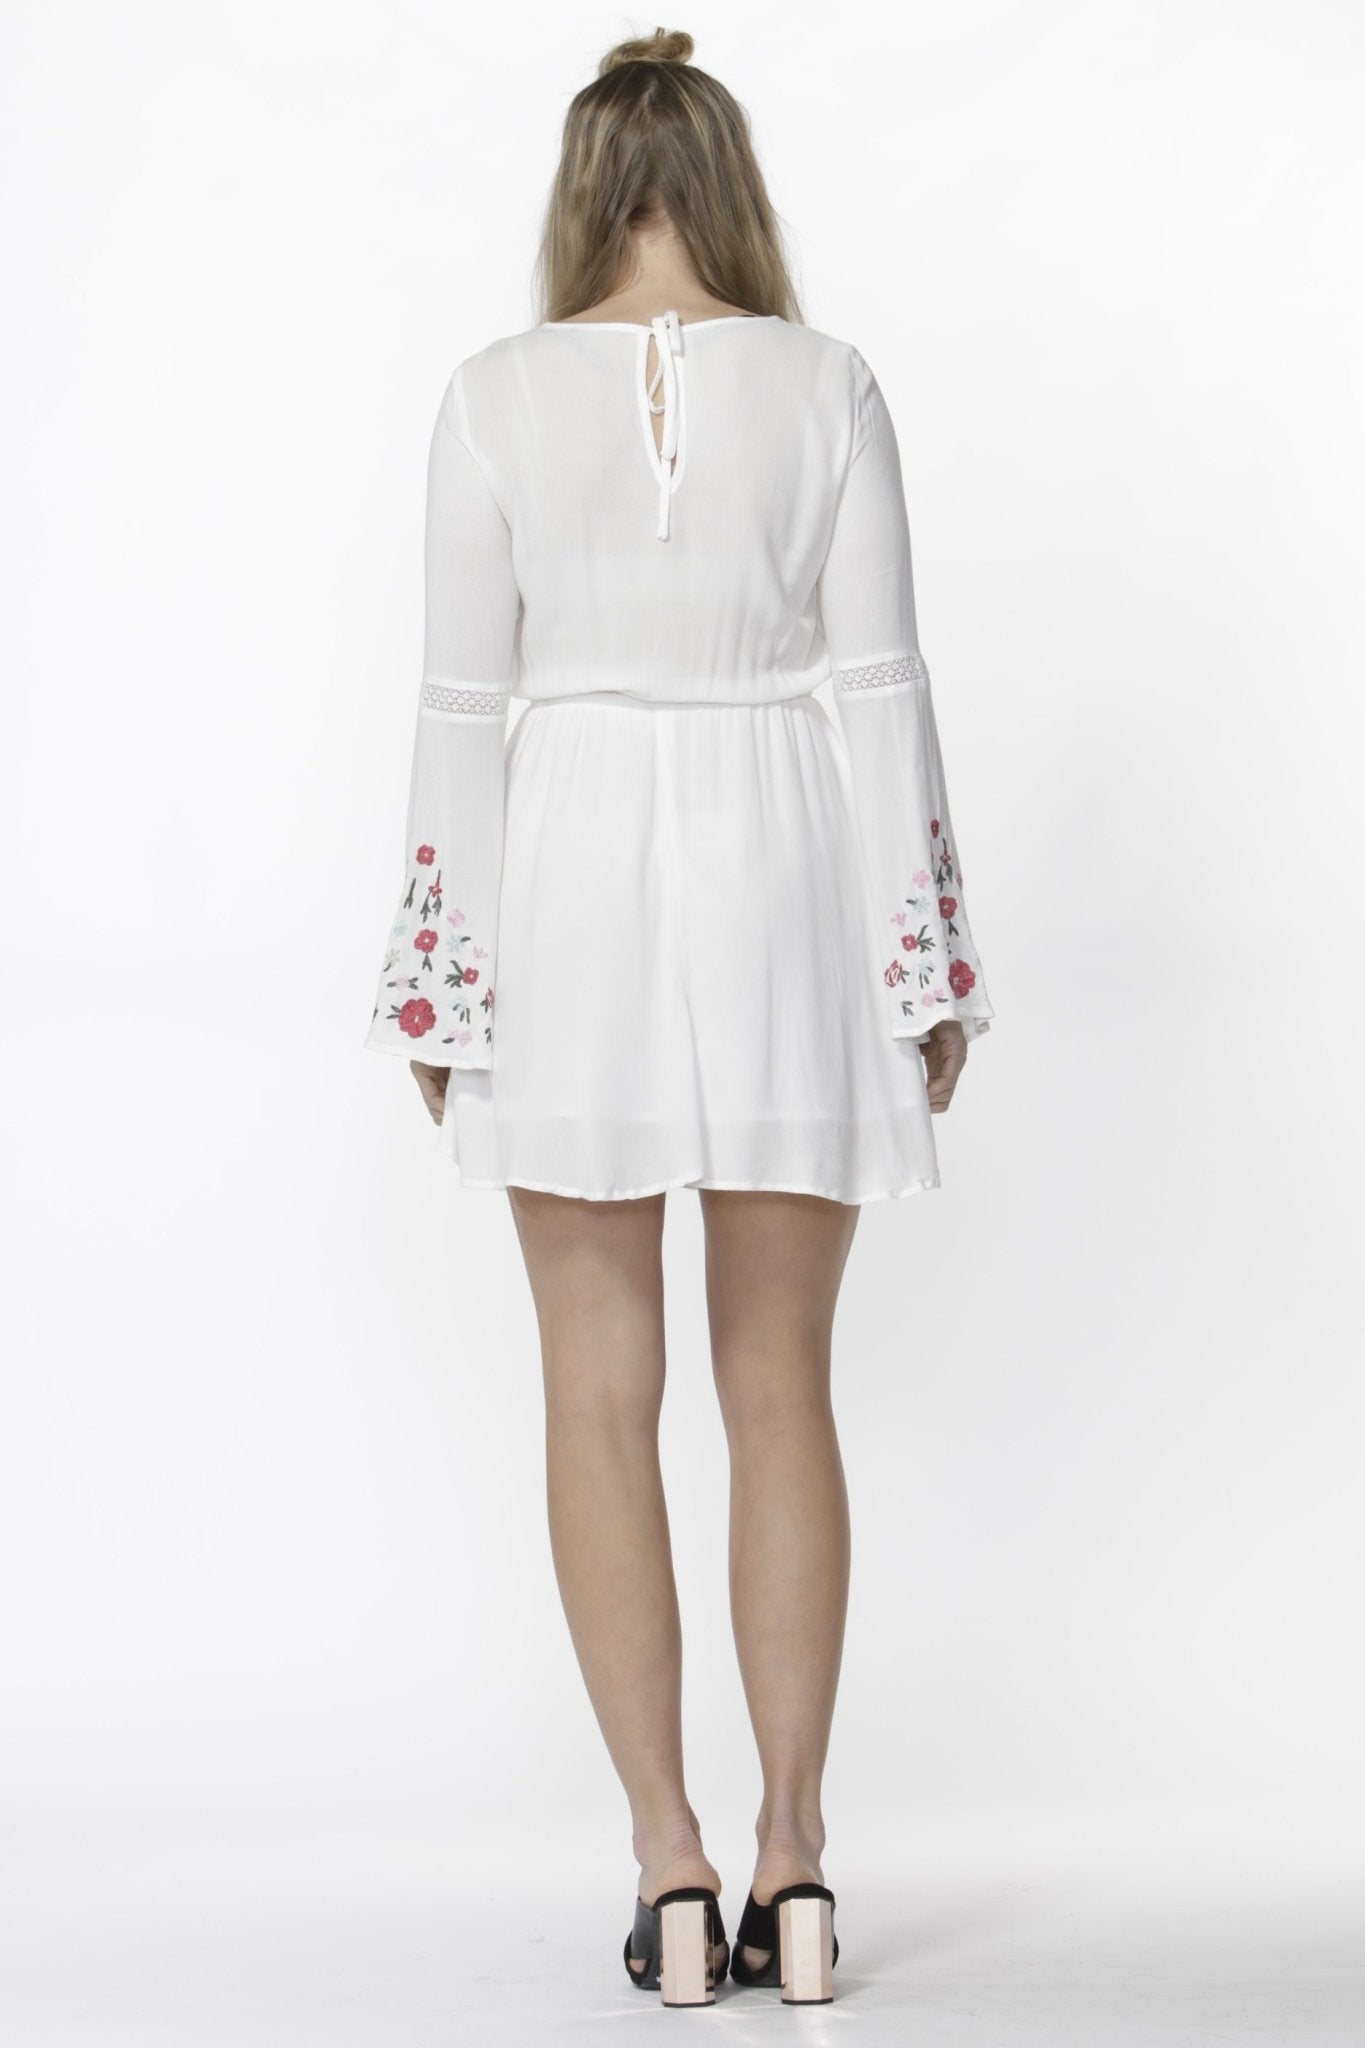 Sass Daliah Embroidered Bell Sleeve Boho Dress in White - Hey Sara